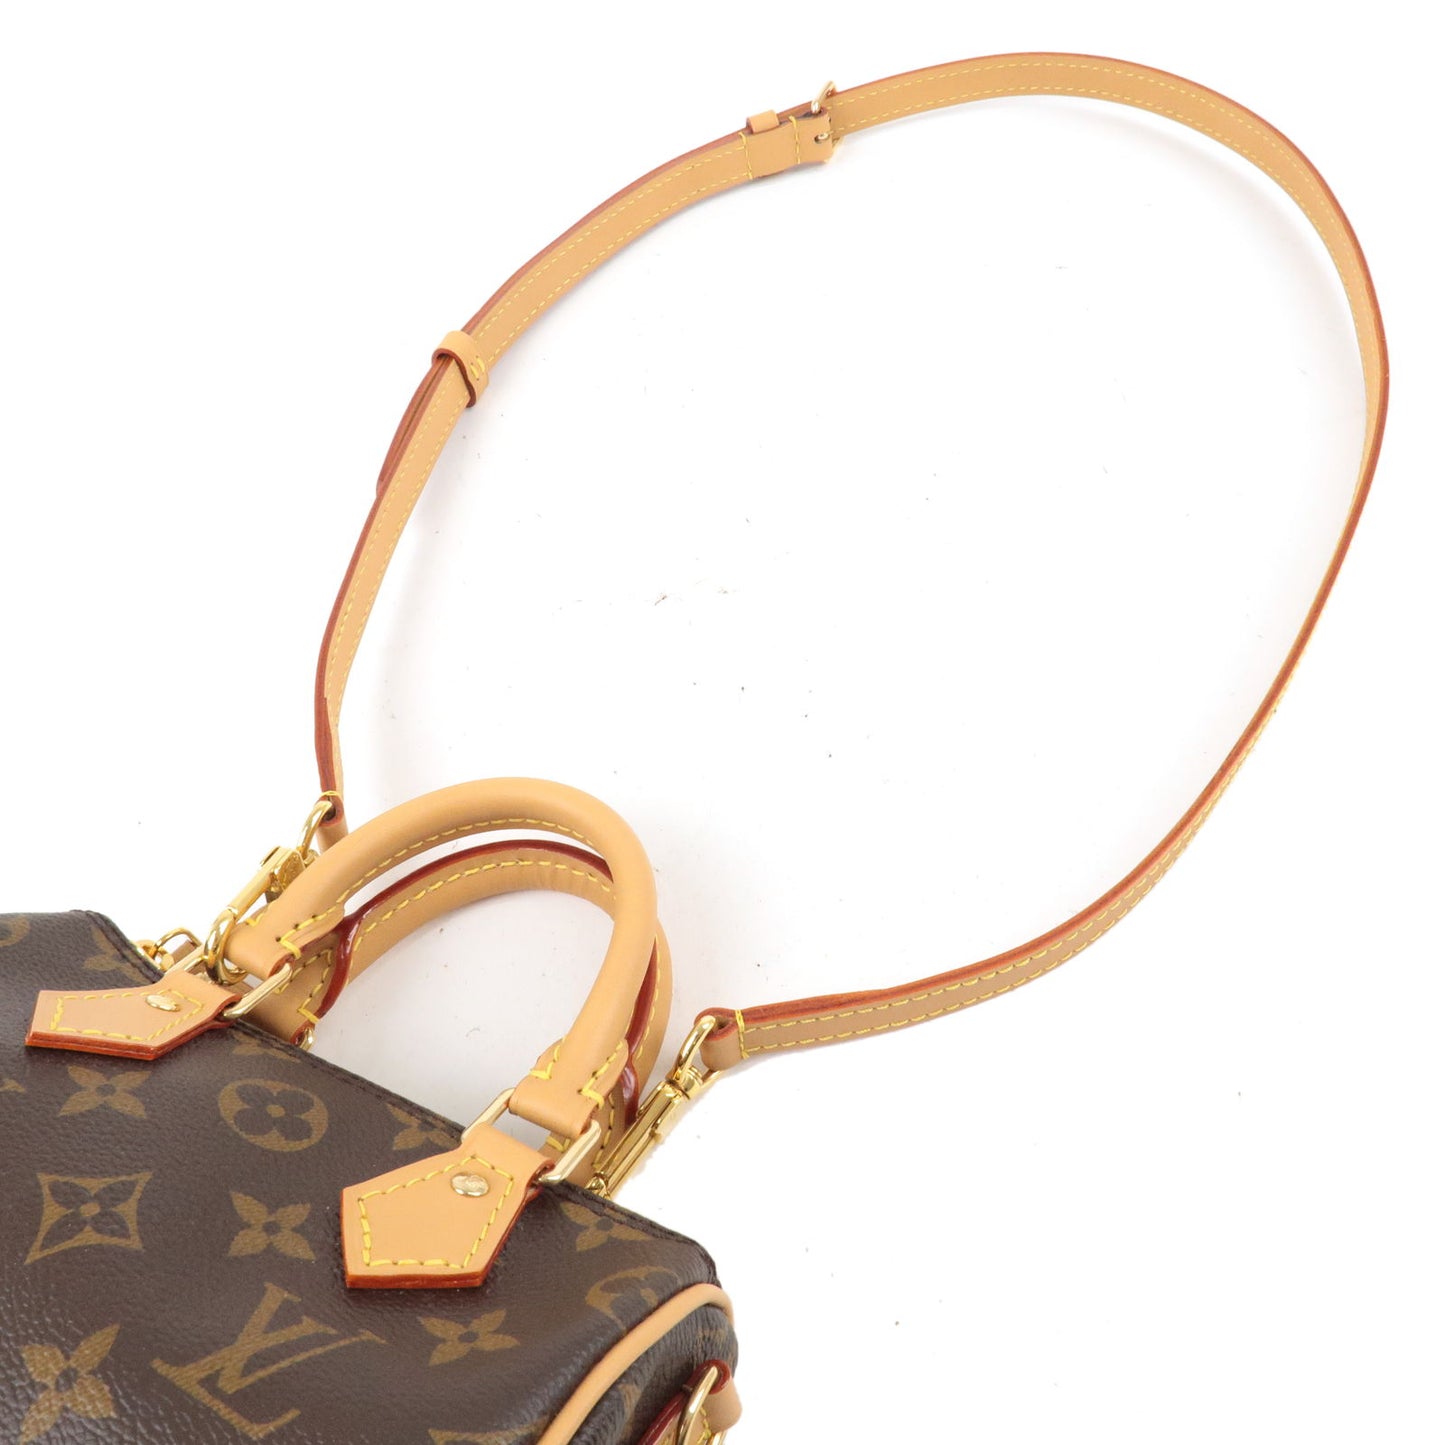 Bag - Bag - M81085 – dct - Vuitton - 2Way - Nano - ep_vintage